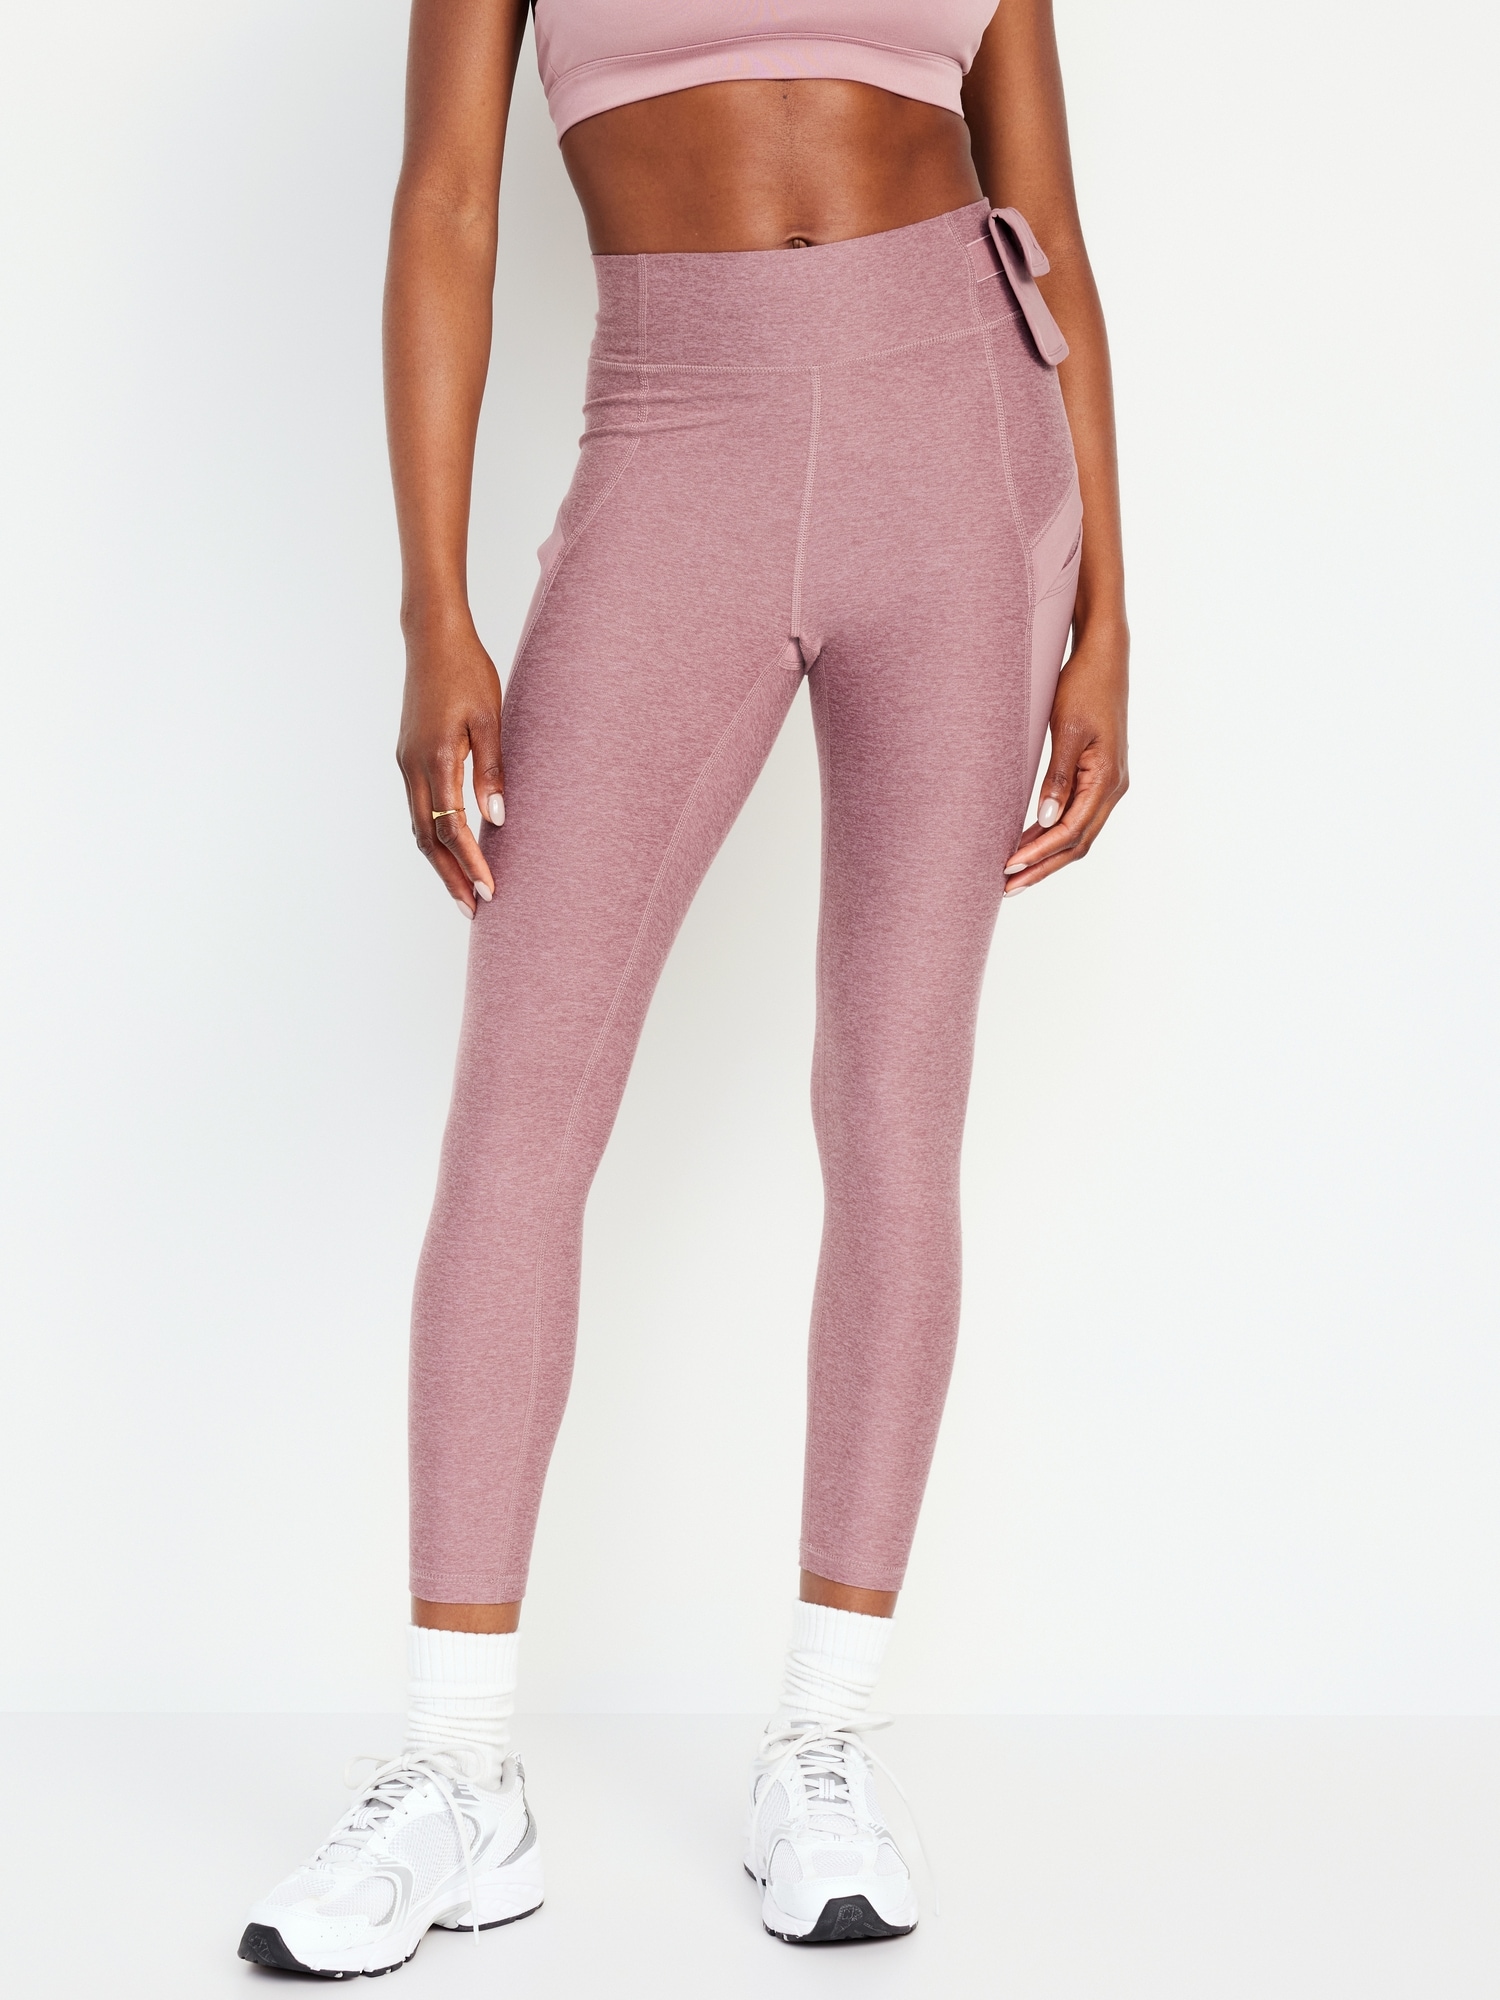 Gymshark Flex Leggings Womens Size XS Heathered Charcoal Gray Pink Waistband